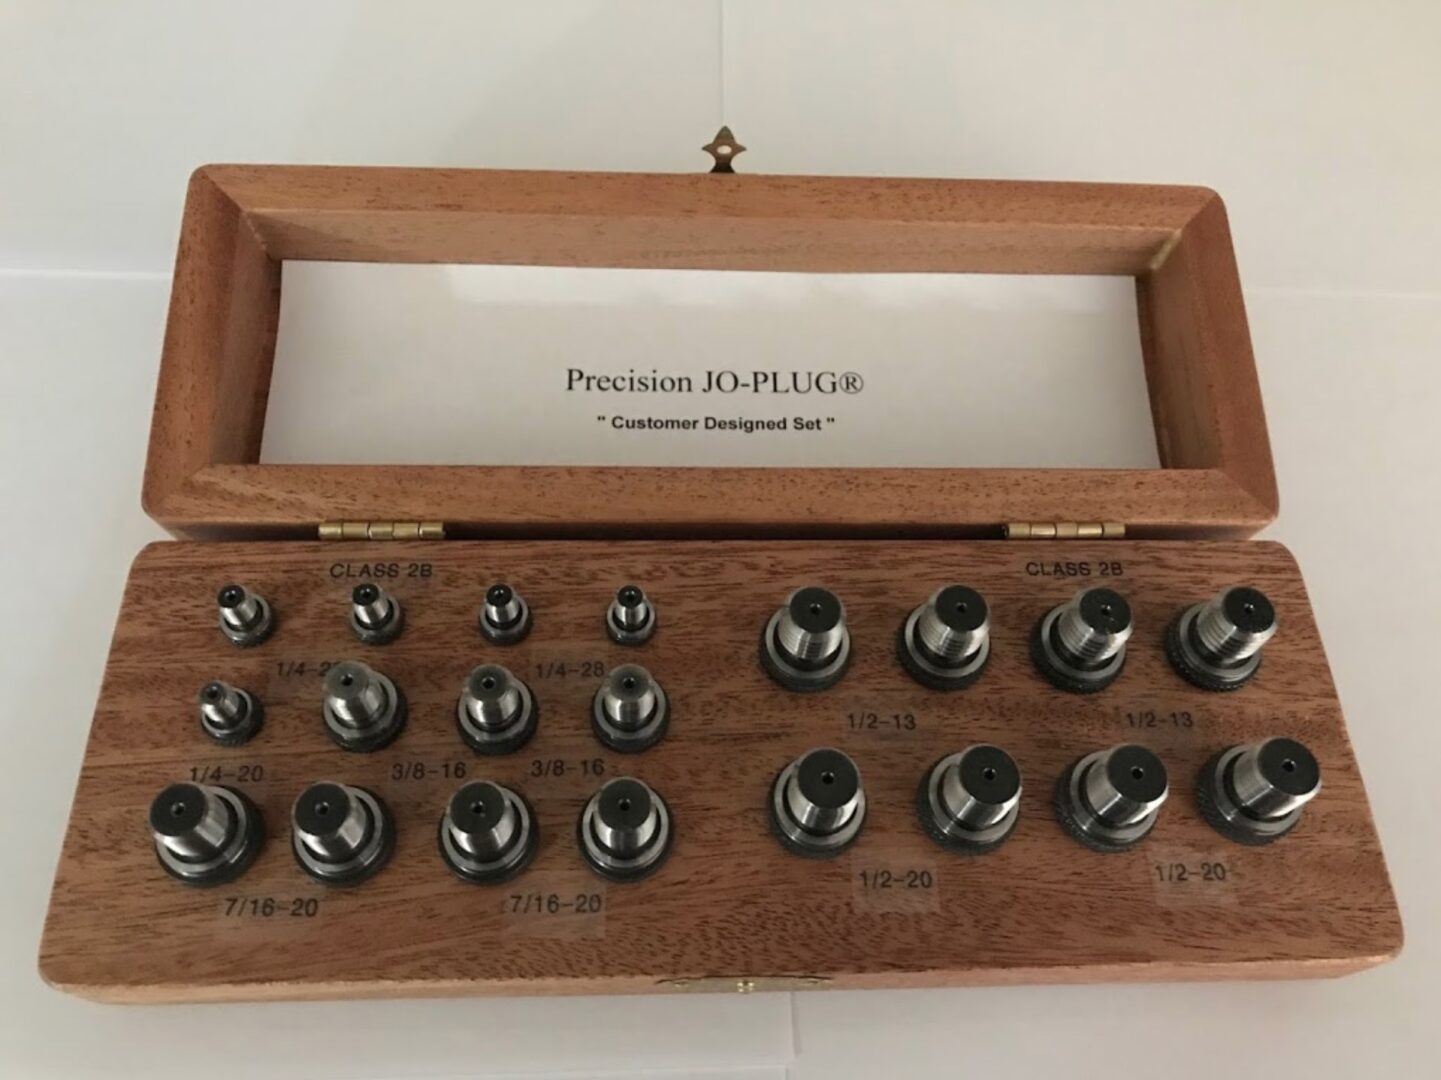 Customer-designed Precision JO-PLUG set